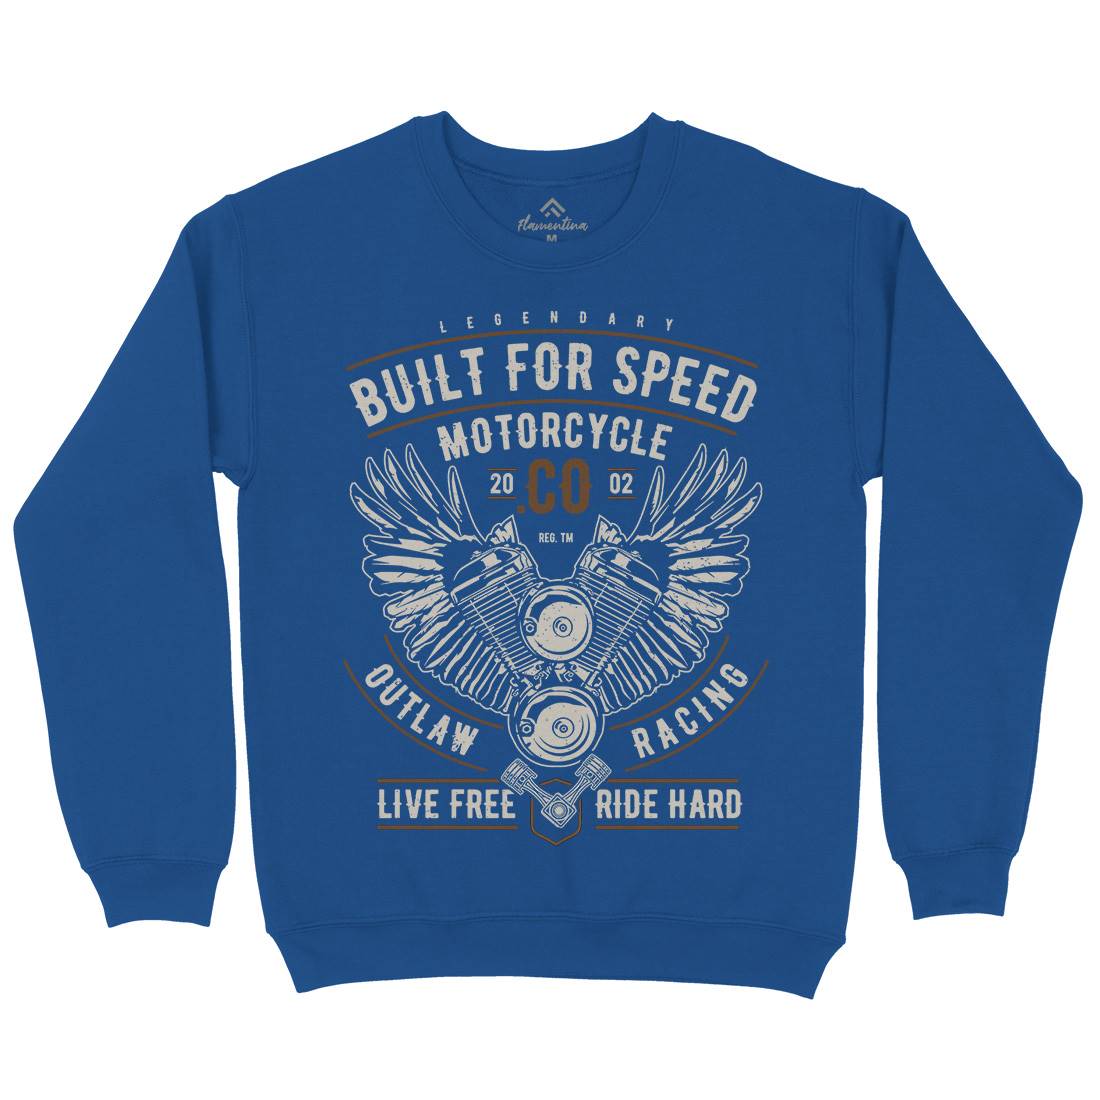 Built For Speed Kids Crew Neck Sweatshirt Motorcycles A628